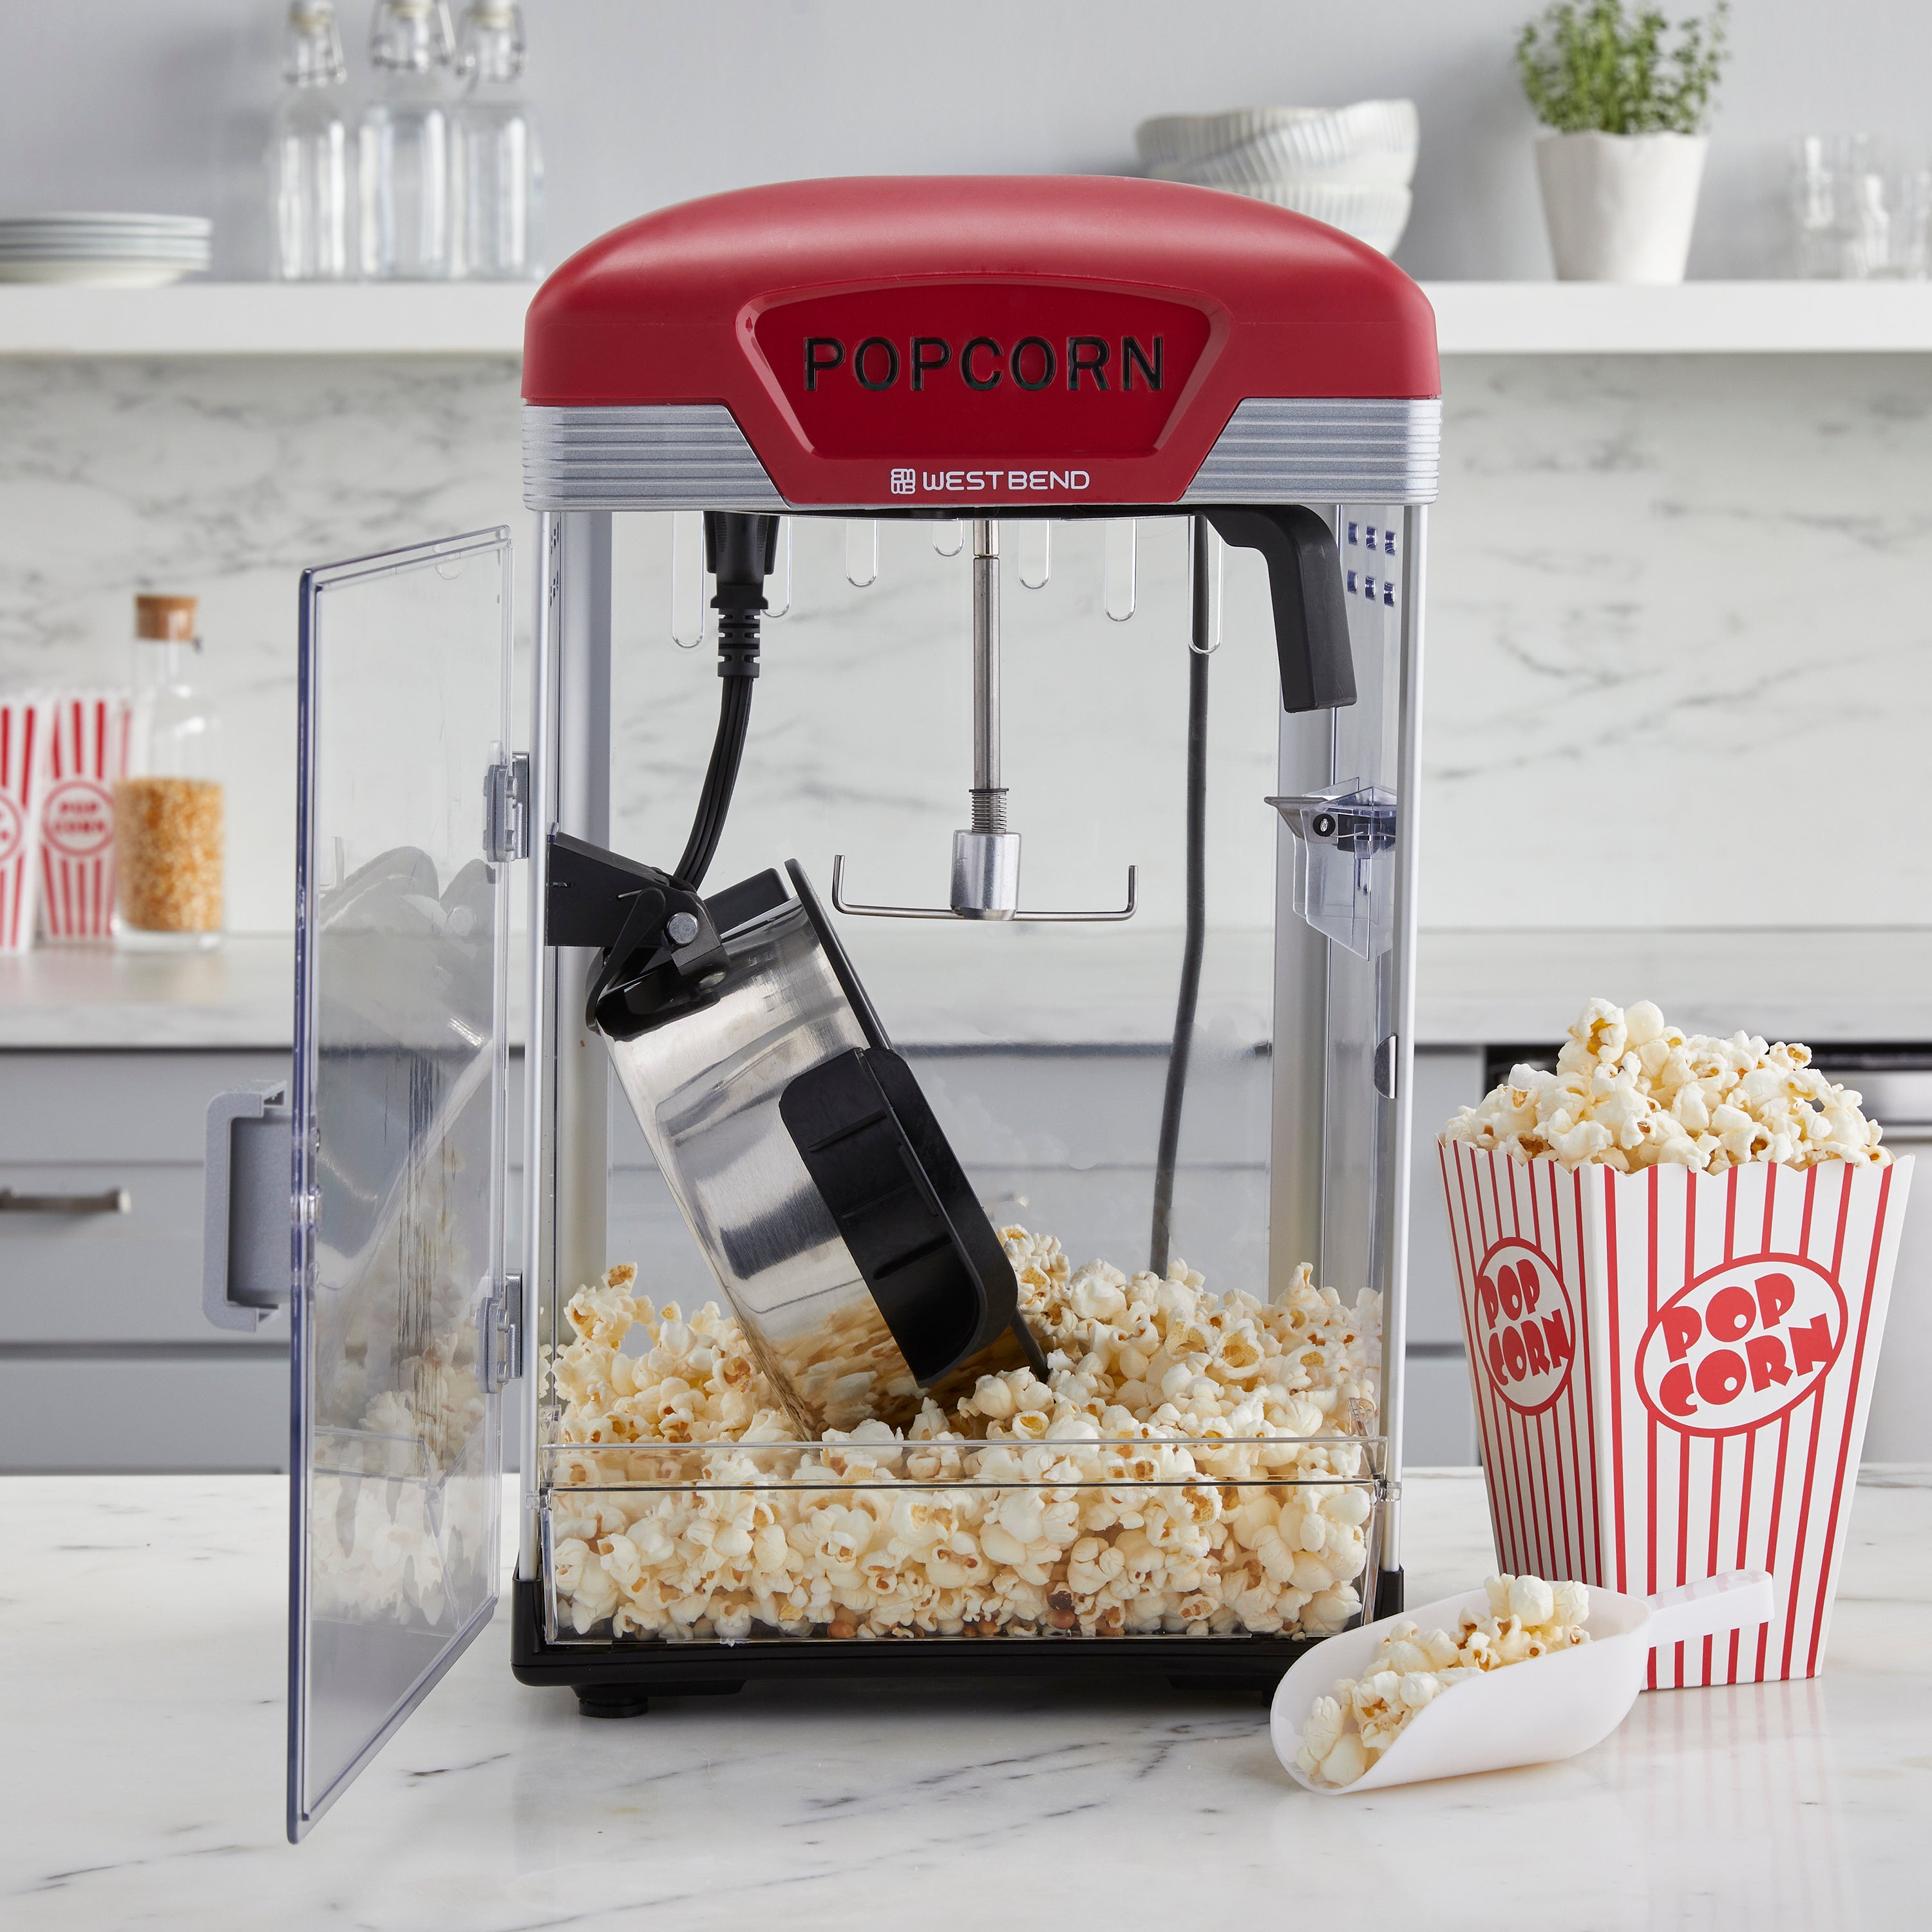 How to make cinema-style popcorn